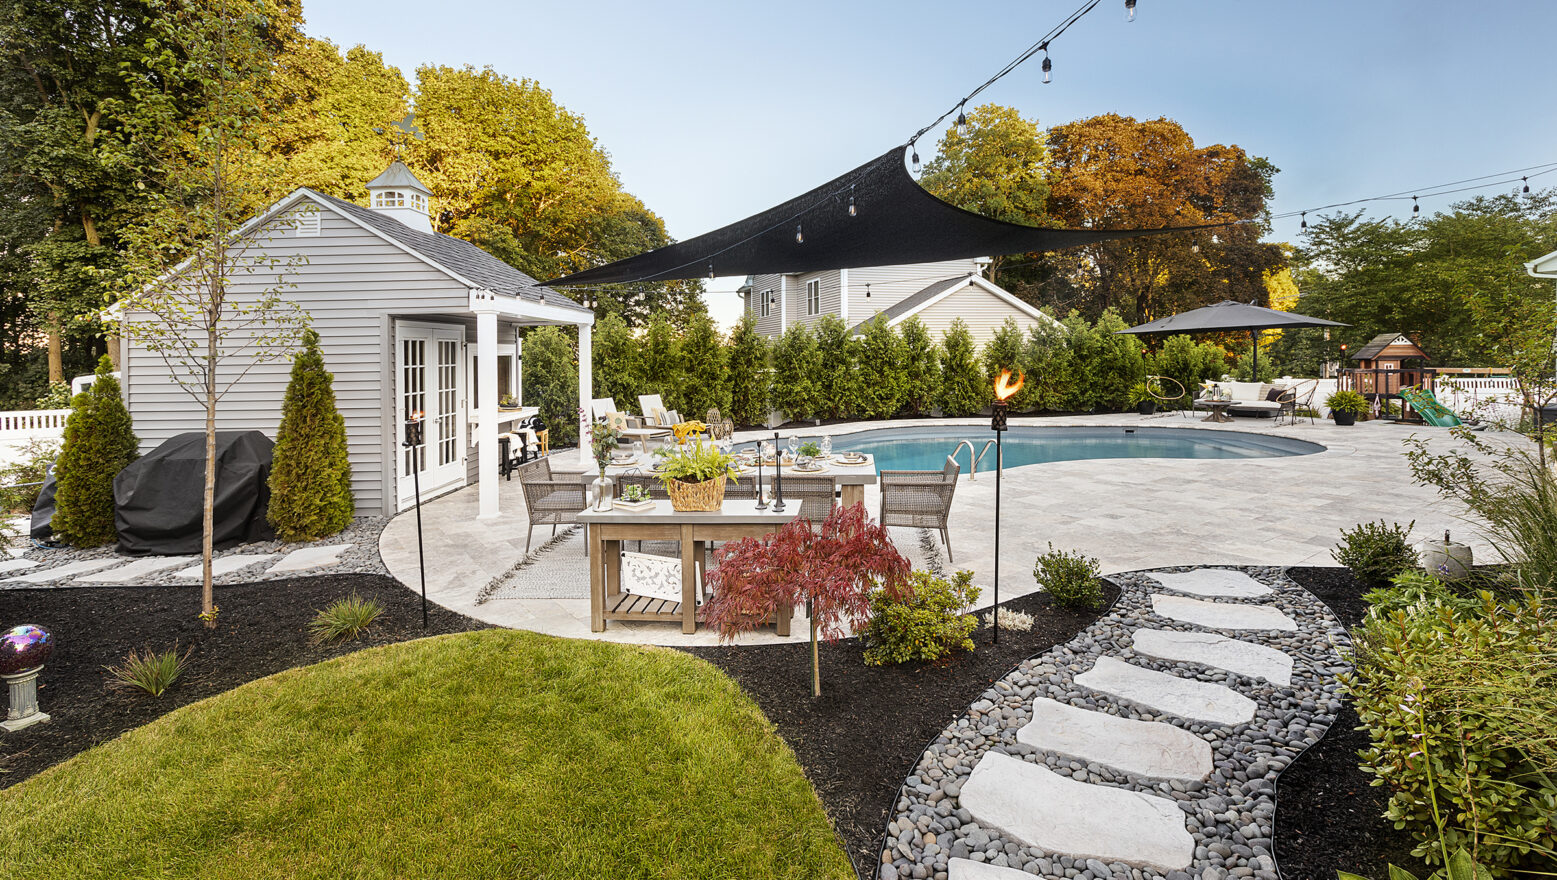 Residential Landscape Design & Build Project in Shrewsbury, Massachusetts